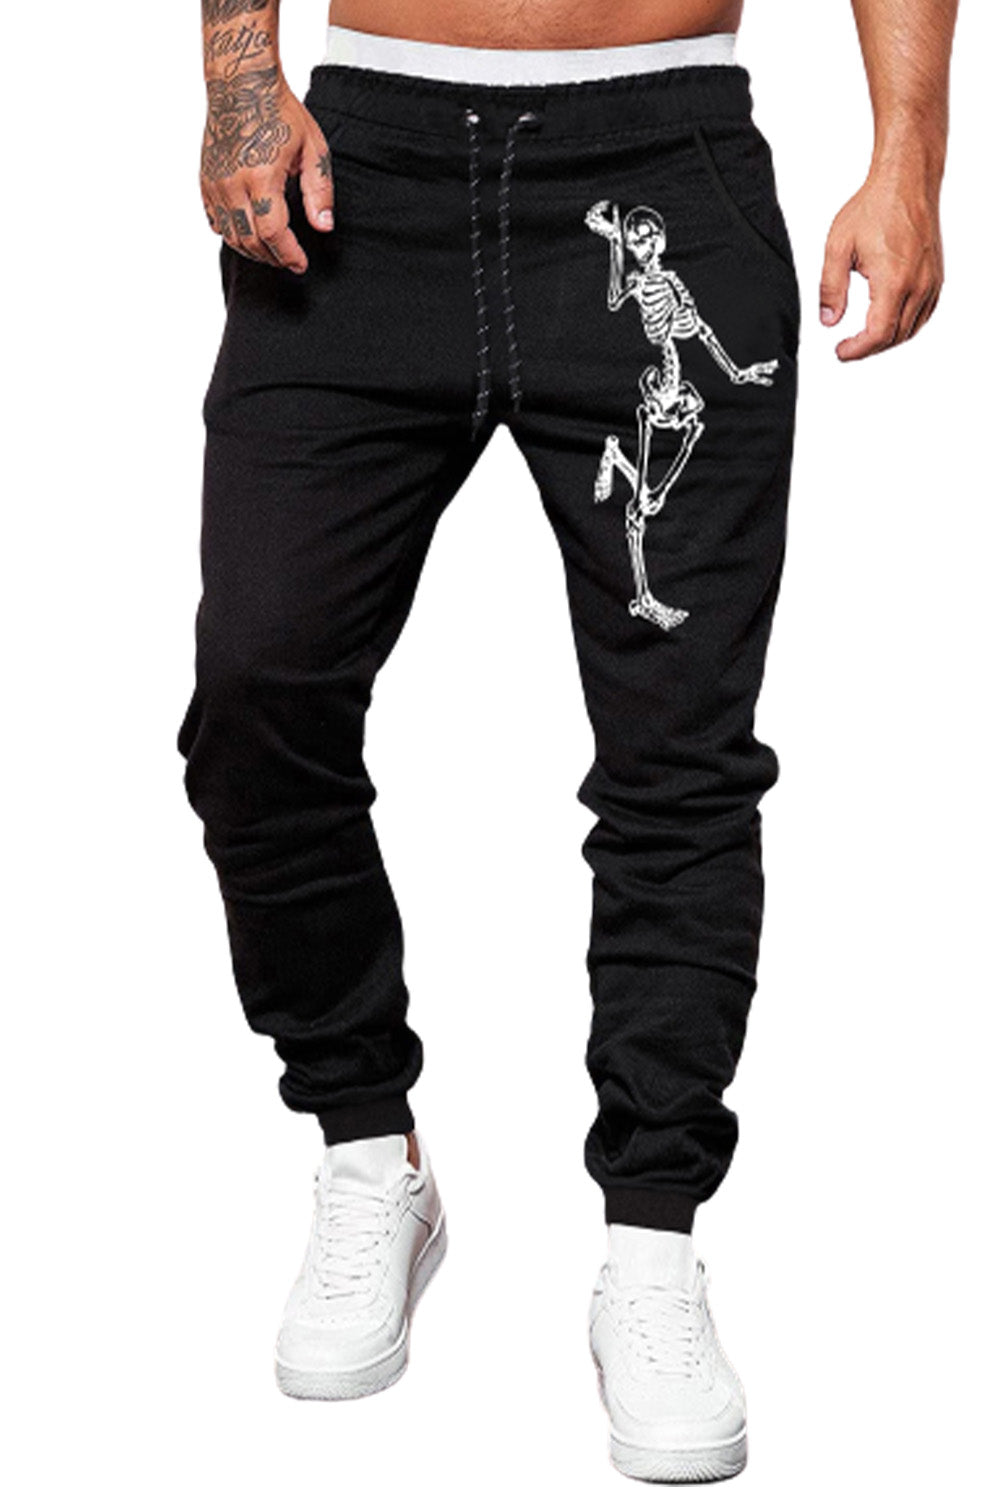 Black Skeleton Print Drawstring Elastic Waist Men's Sweatpants Men's Pants JT's Designer Fashion